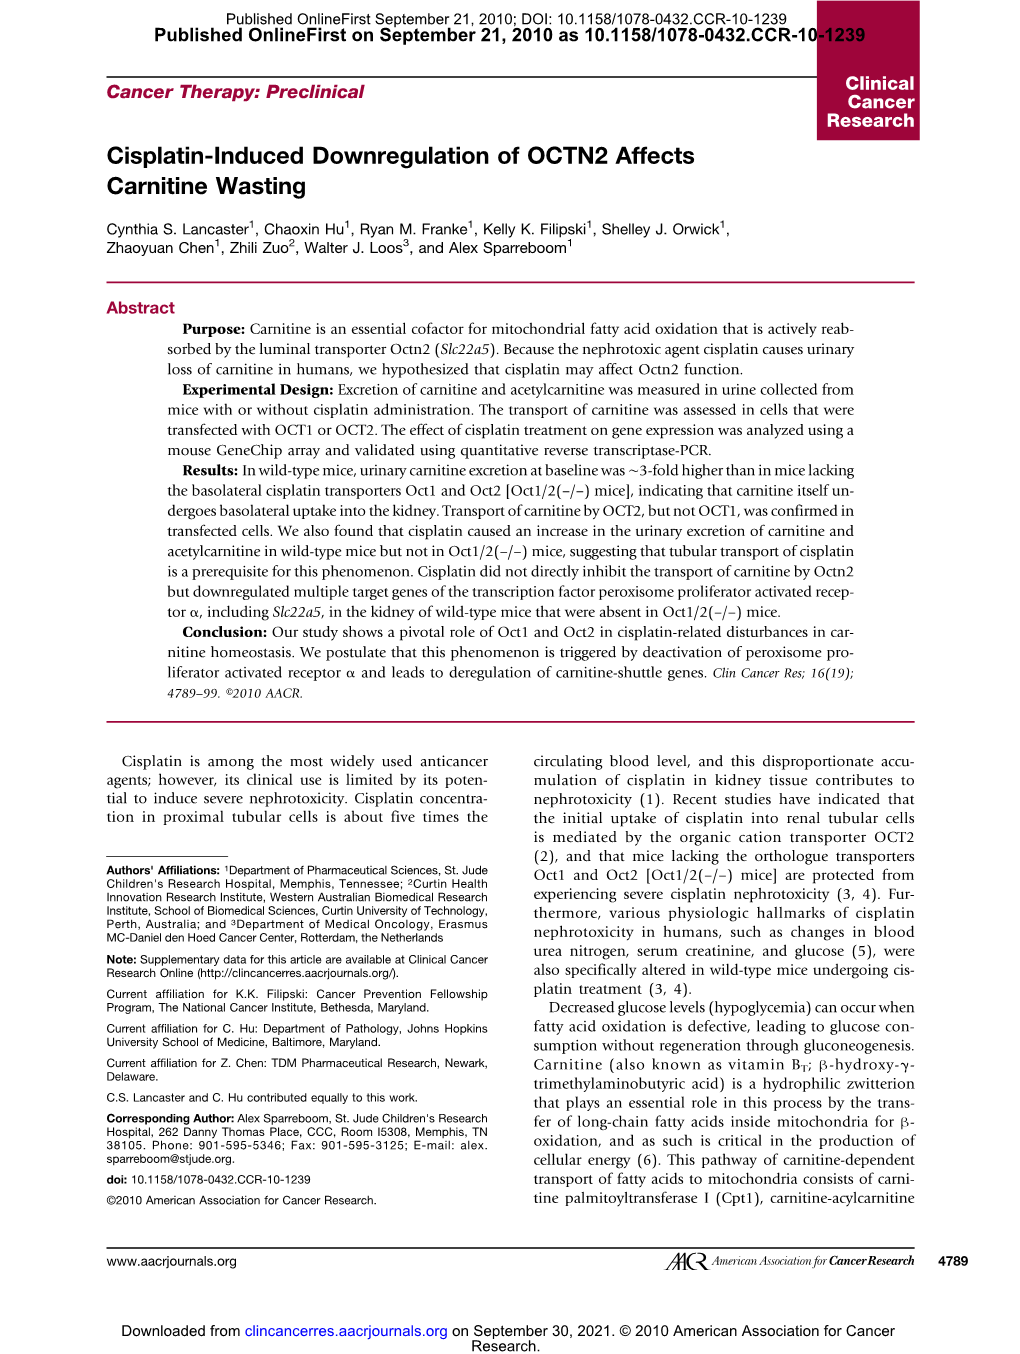 Cisplatin-Induced Downregulation of OCTN2 Affects Carnitine Wasting